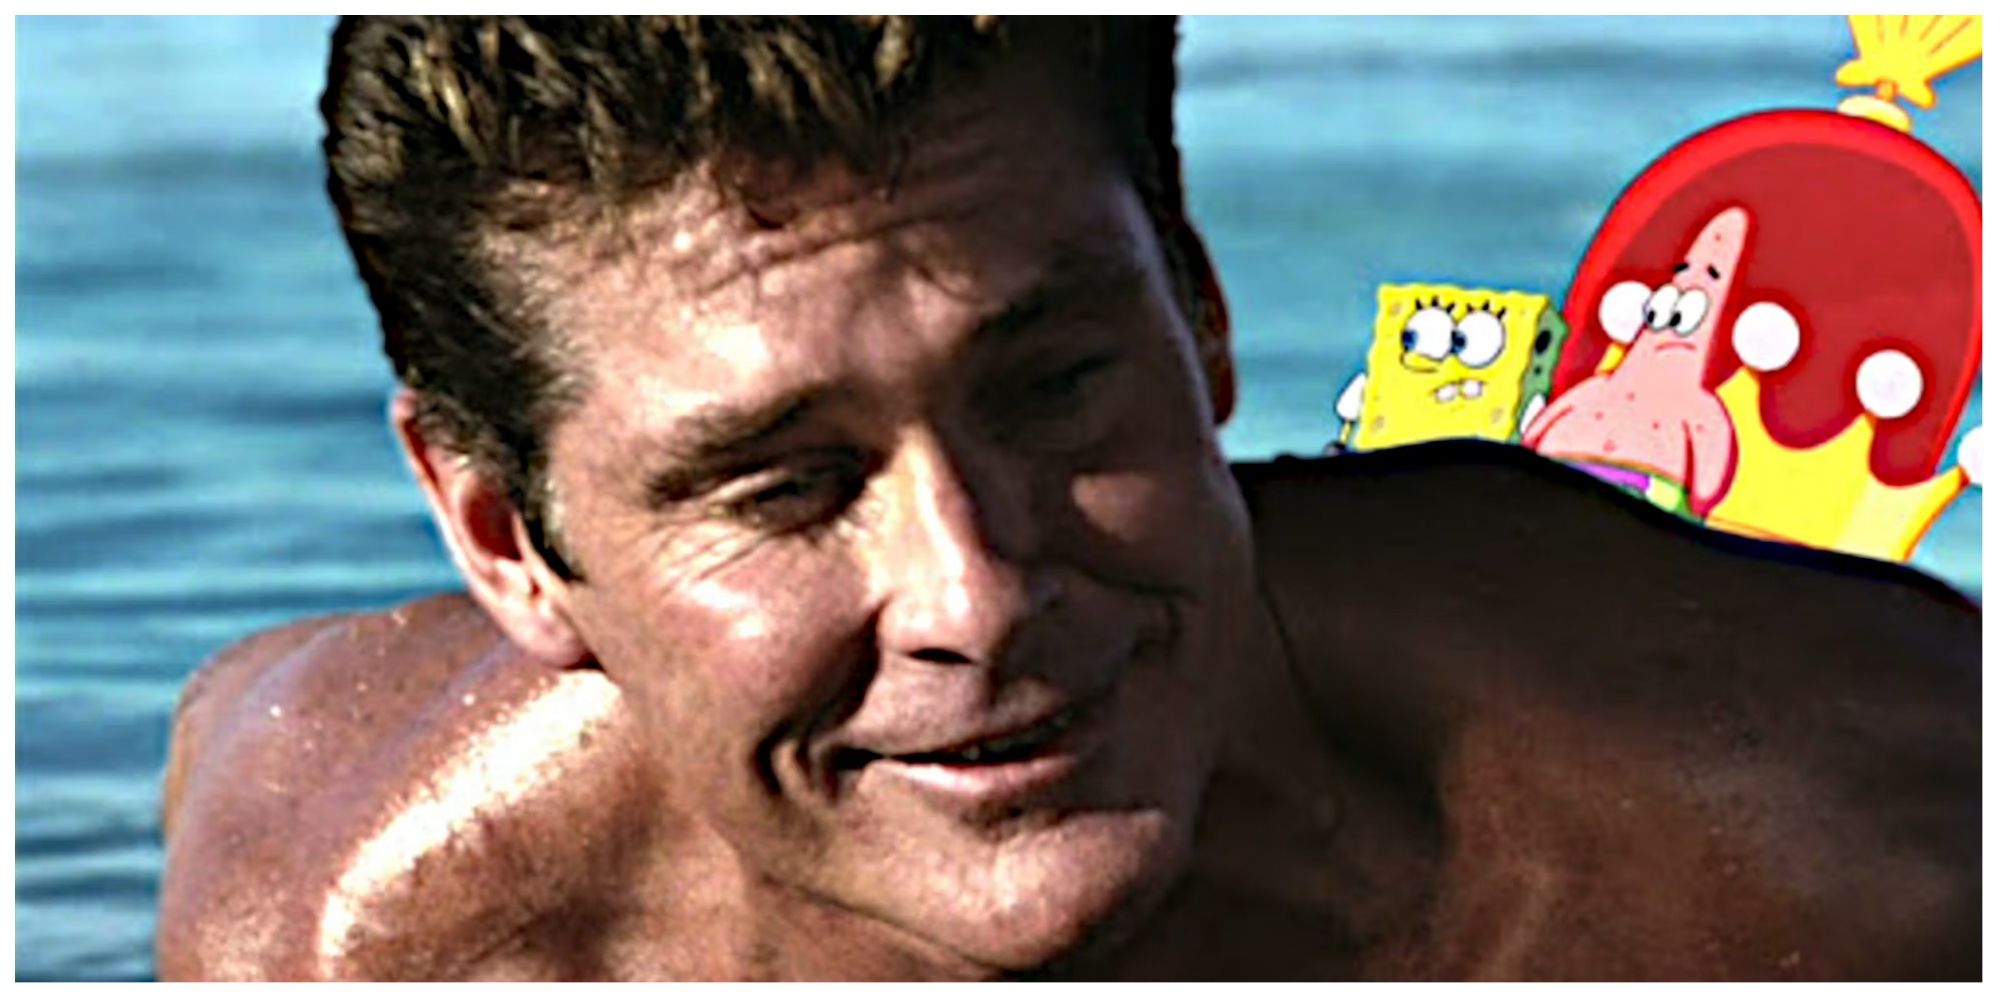 David Hasslehoff in the Spongebob Squarepants movie